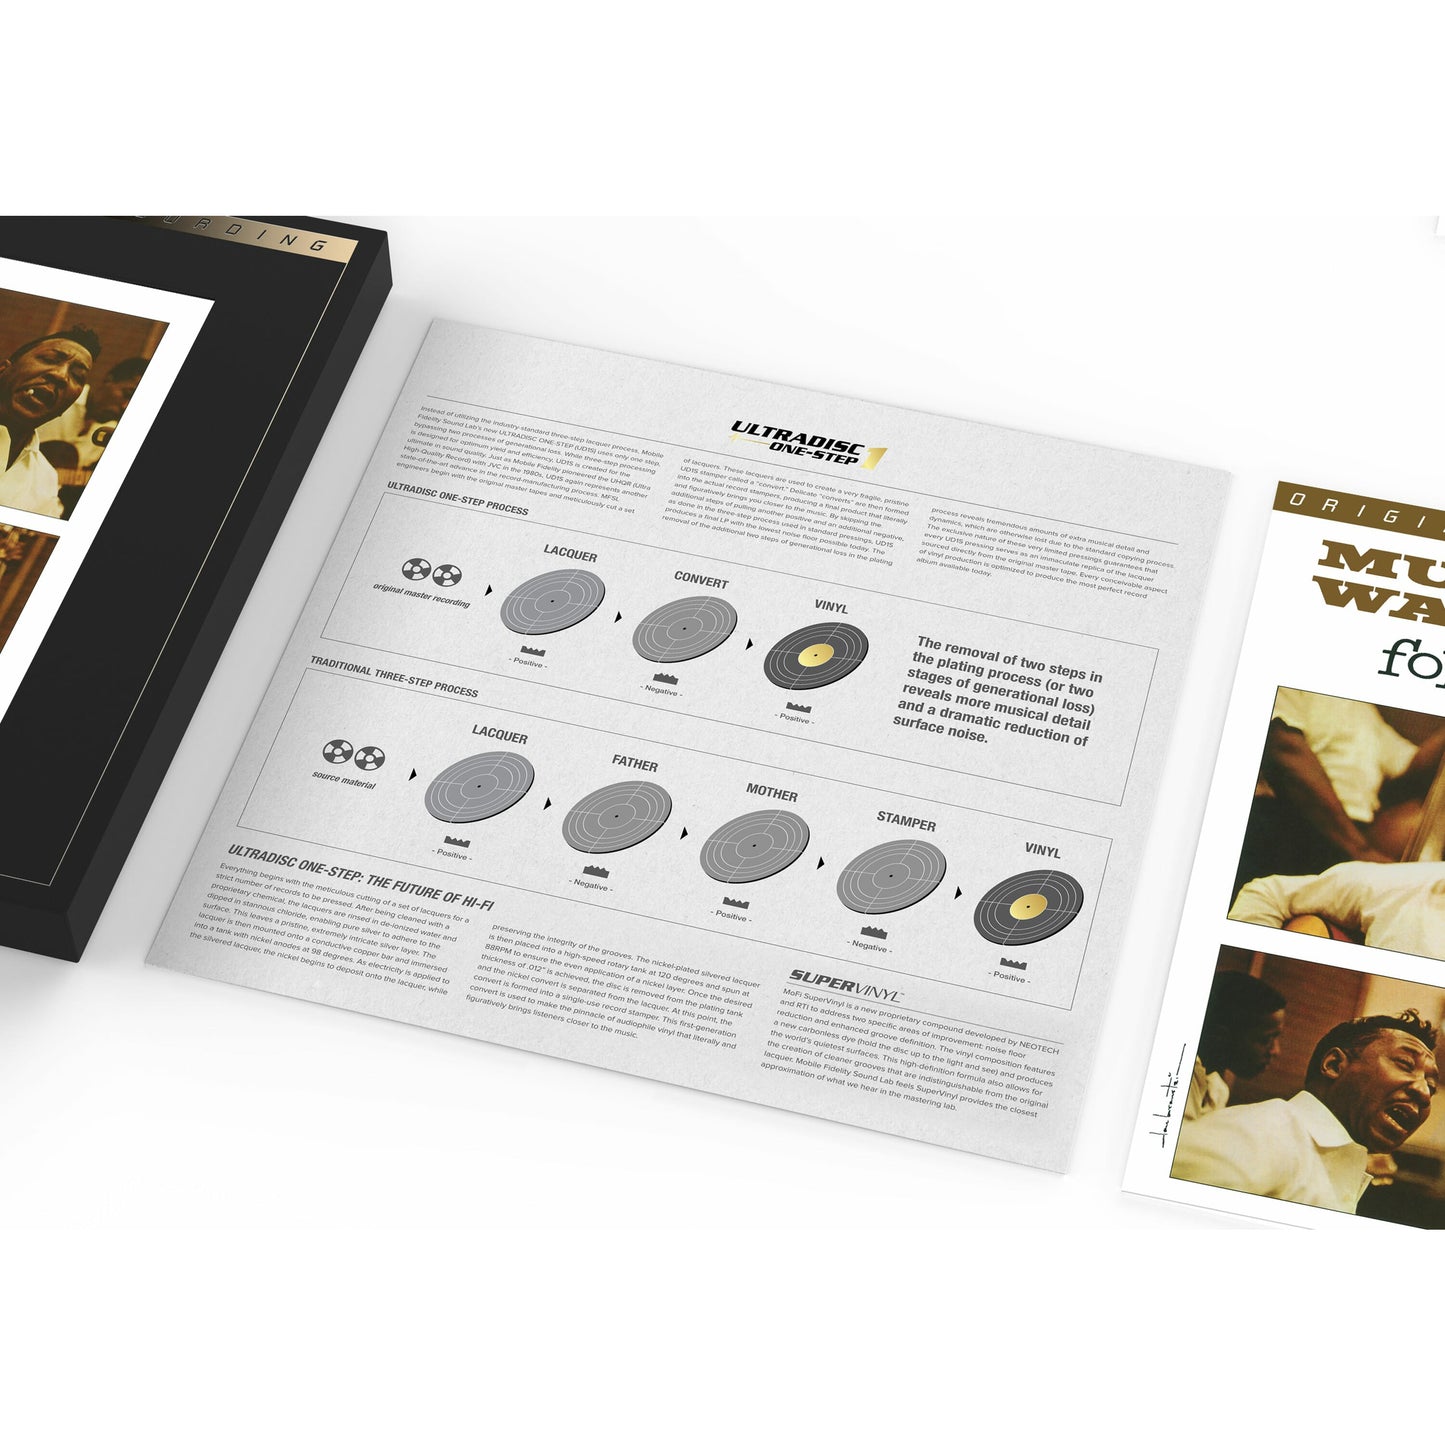 Muddy Waters - Cantante popular - (MFSL UltraDisc One-Step 45rpm Vinyl 2LP Box Set) 